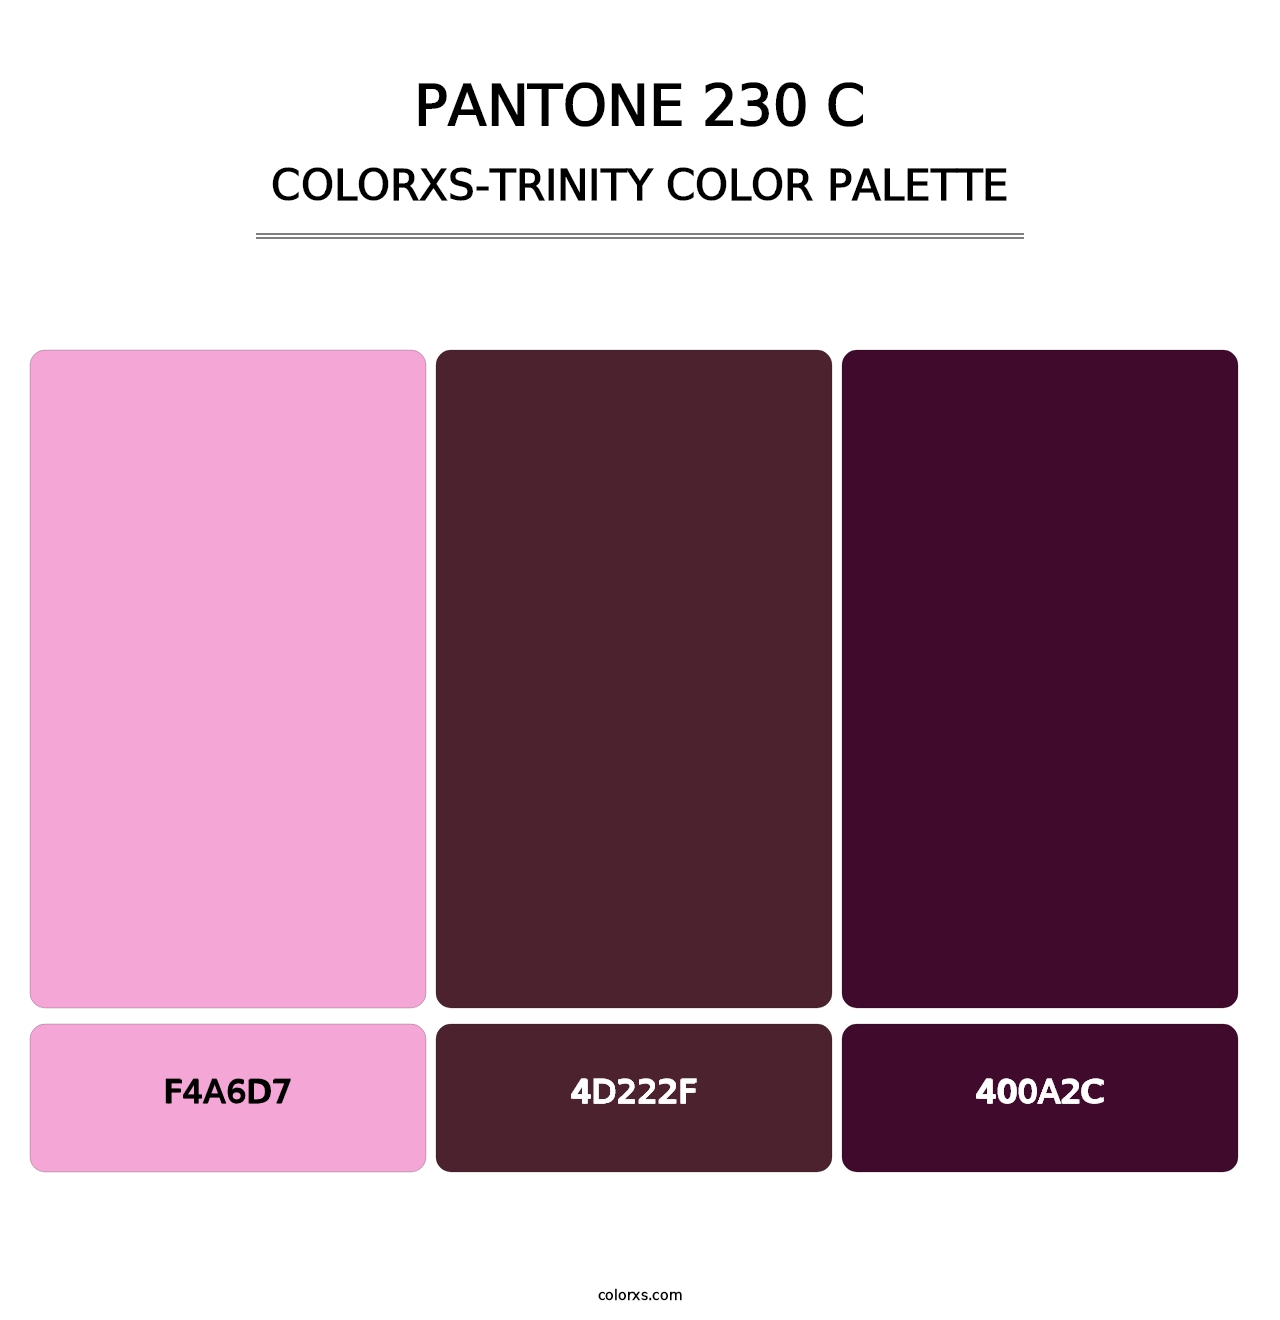 PANTONE 230 C - Colorxs Trinity Palette